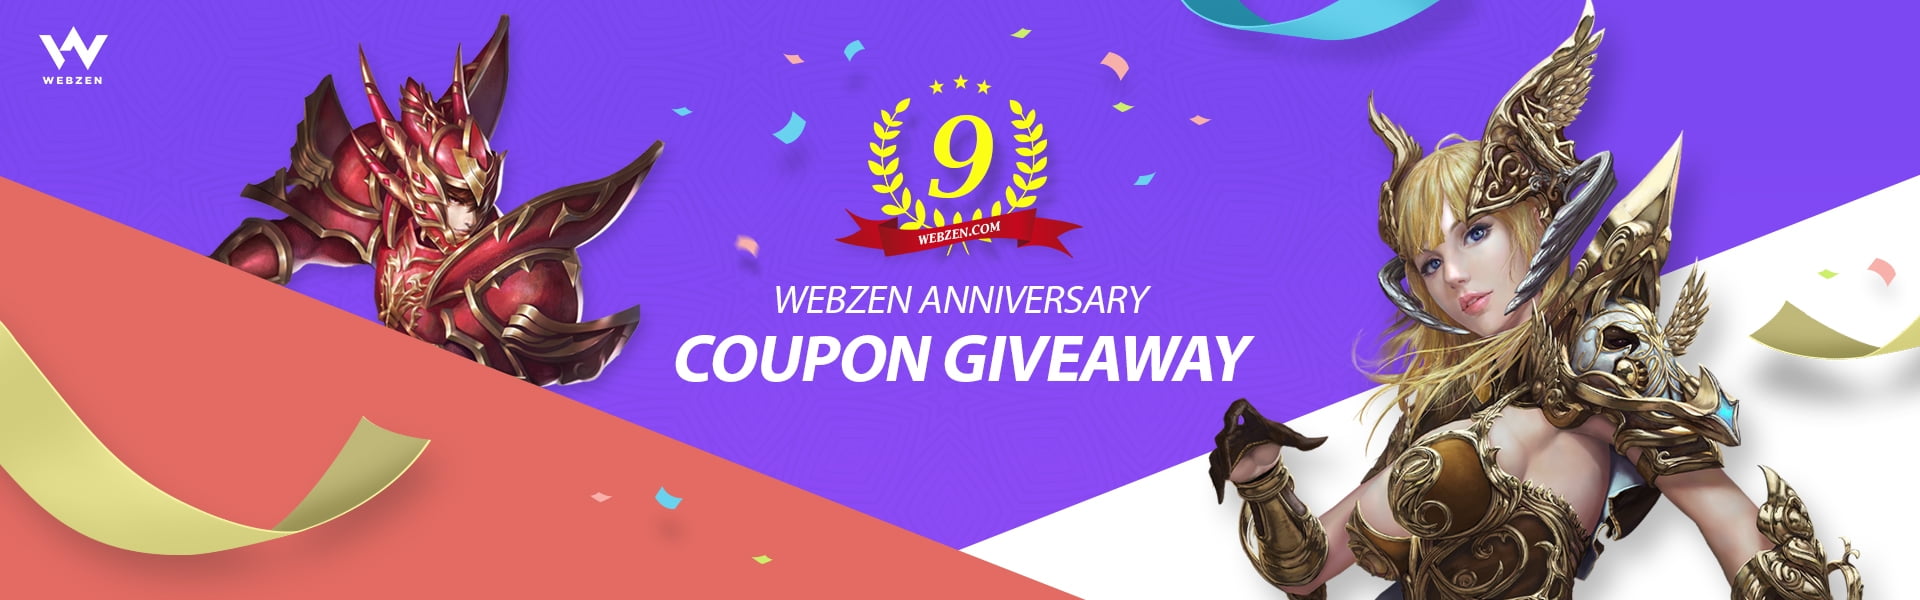 Webzen.com's 9th Anniversary Coupon Giveaway 13